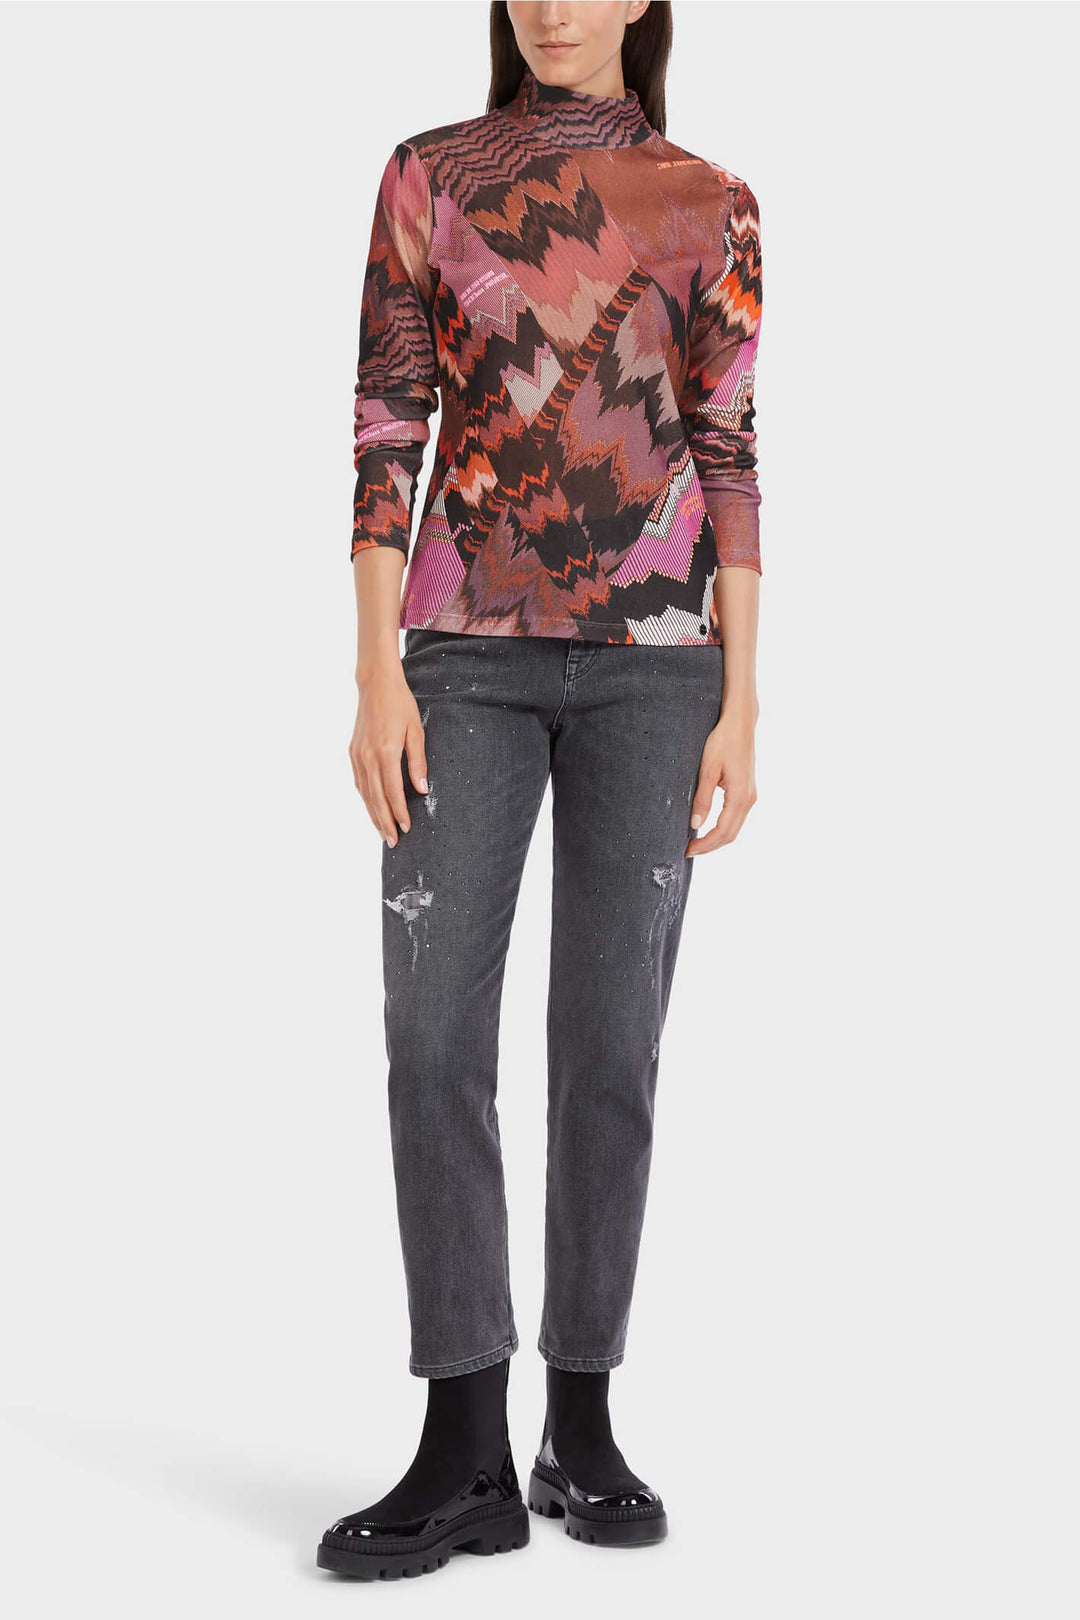 Marc Cain Sports VS 48.52 J49 254 Bright Orchid Long Sleeve T-Shirt - Olivia Grace Fashion